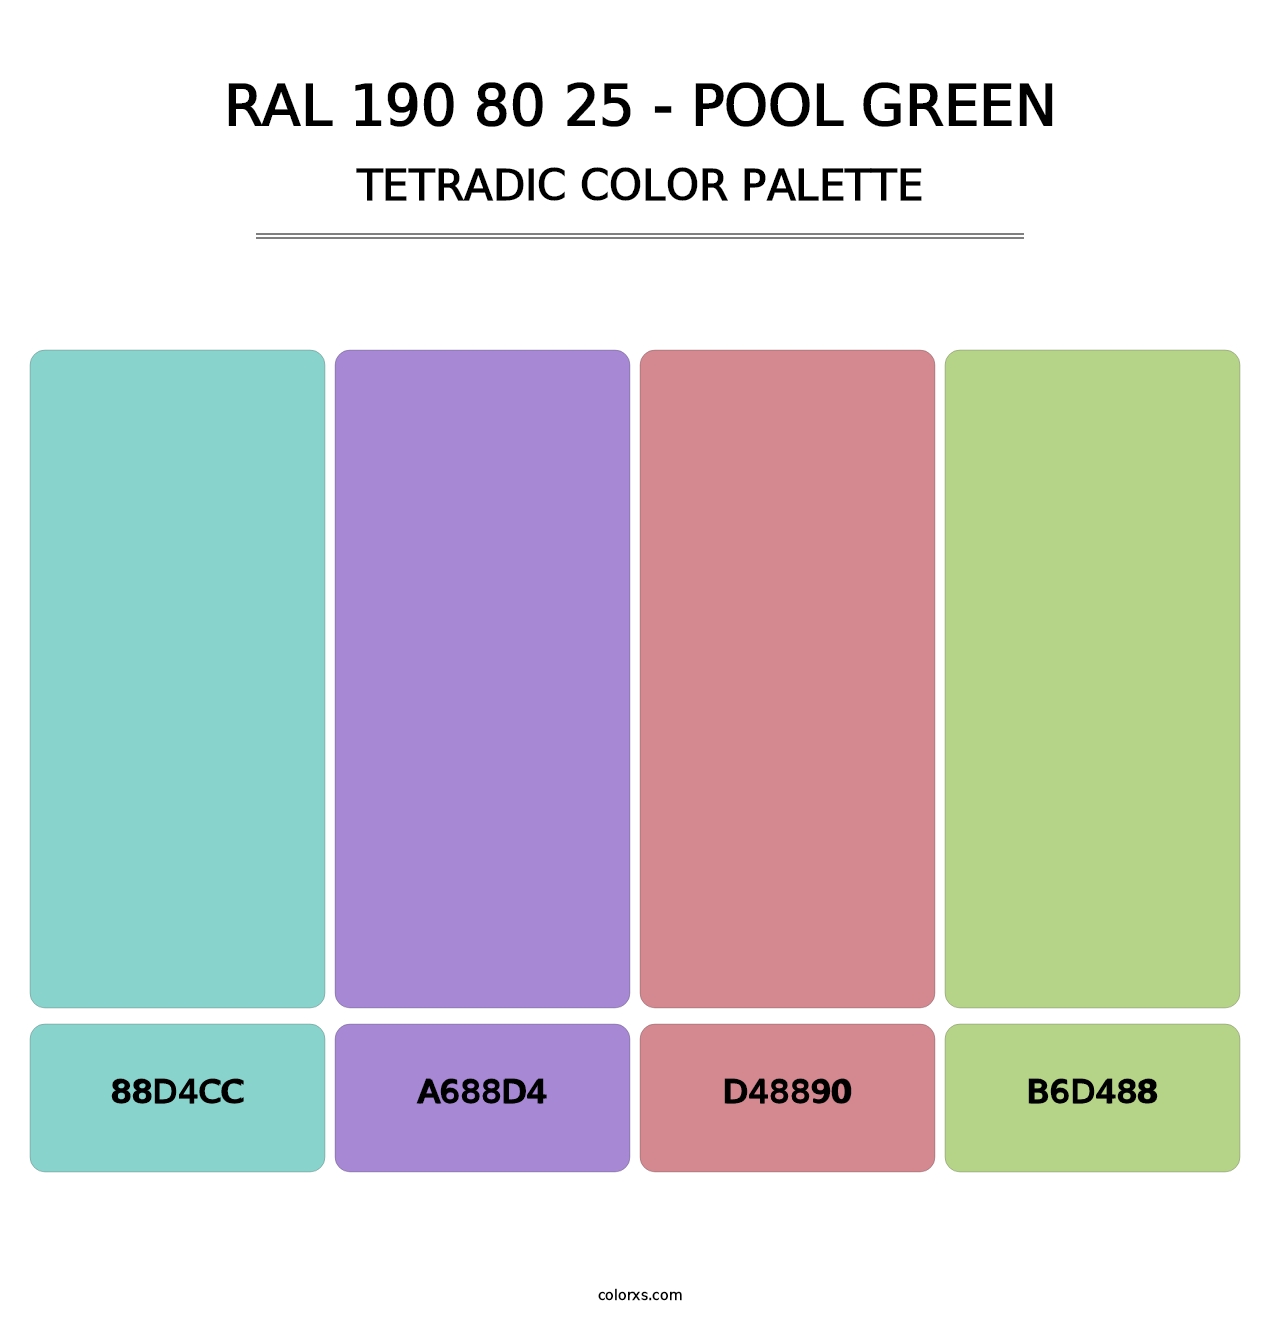 RAL 190 80 25 - Pool Green - Tetradic Color Palette